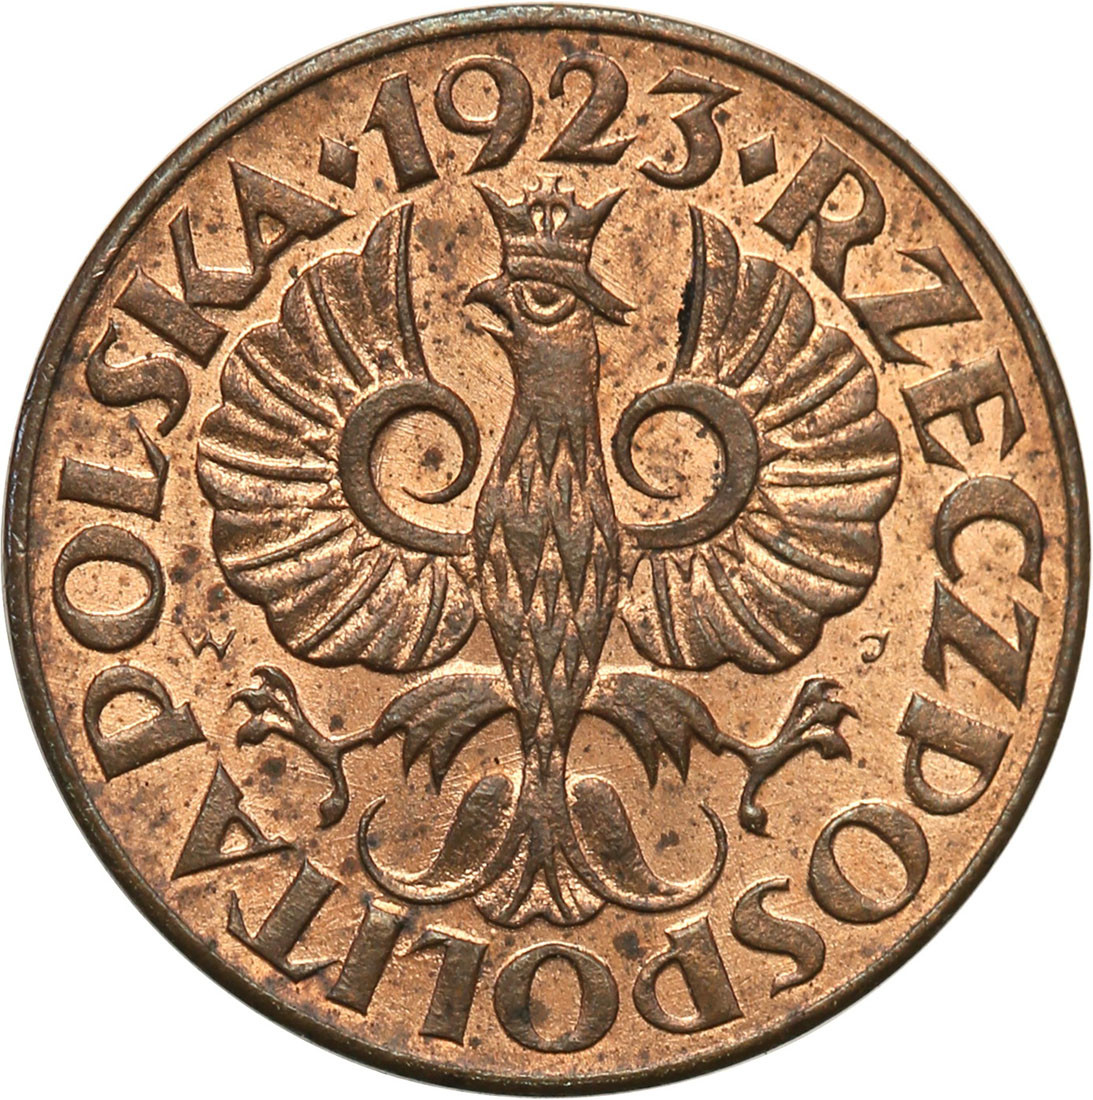 II RP. 1 grosz 1923